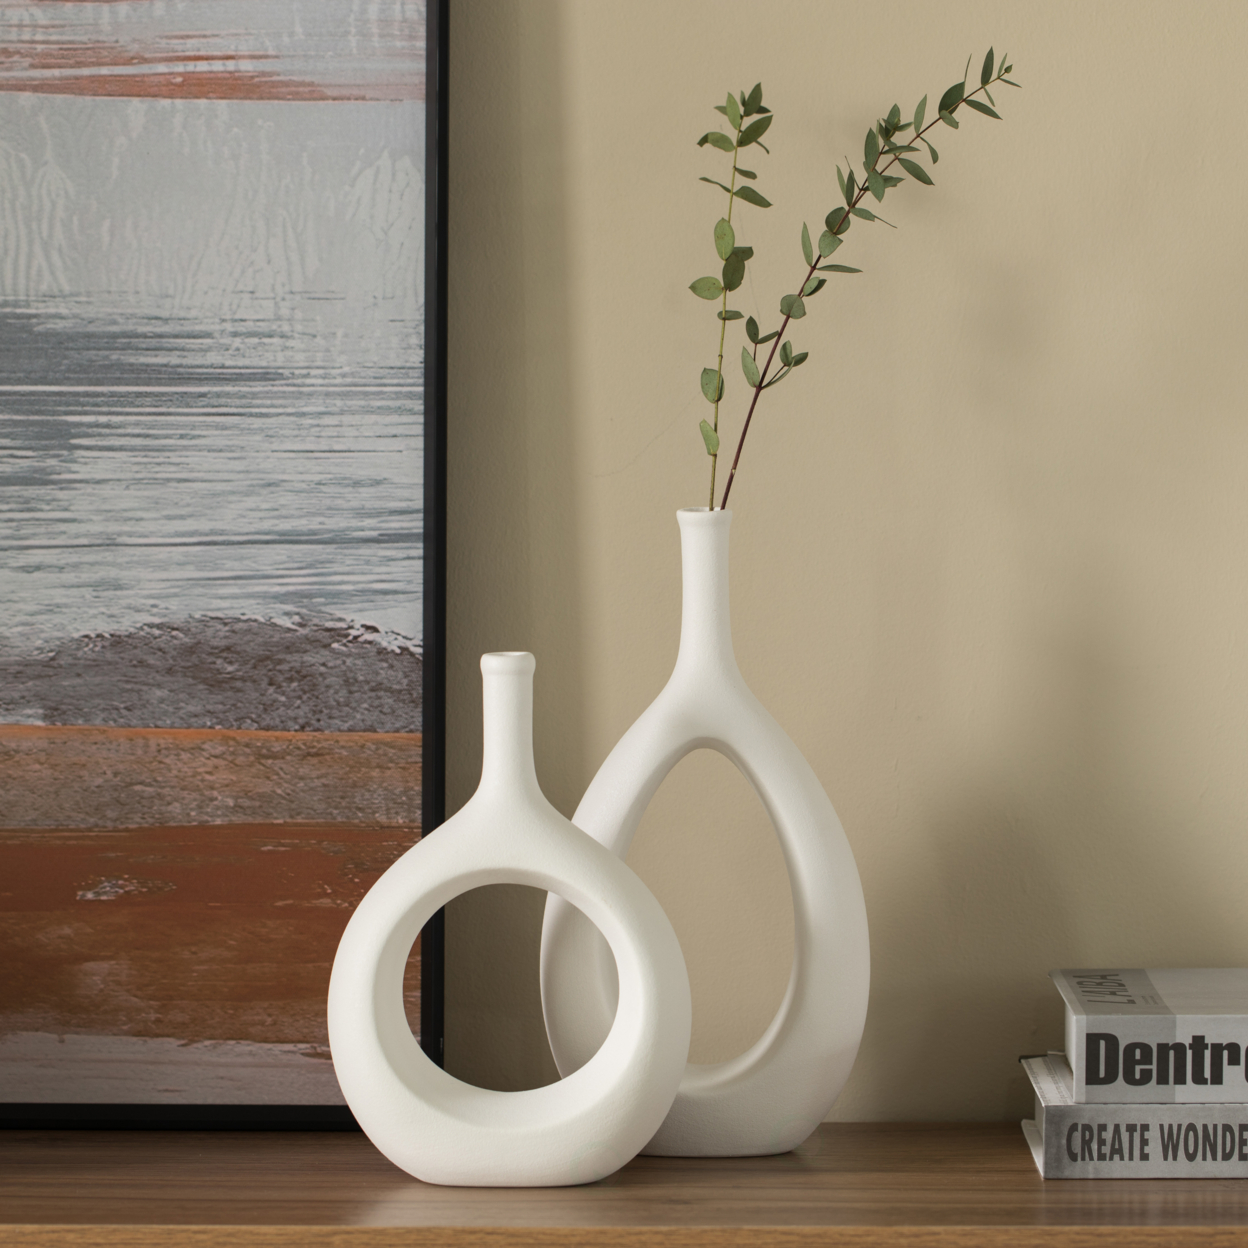 Contemporary White Ceramic Unique Shaped Flower Table Vase Centerpiece - Set Of 2